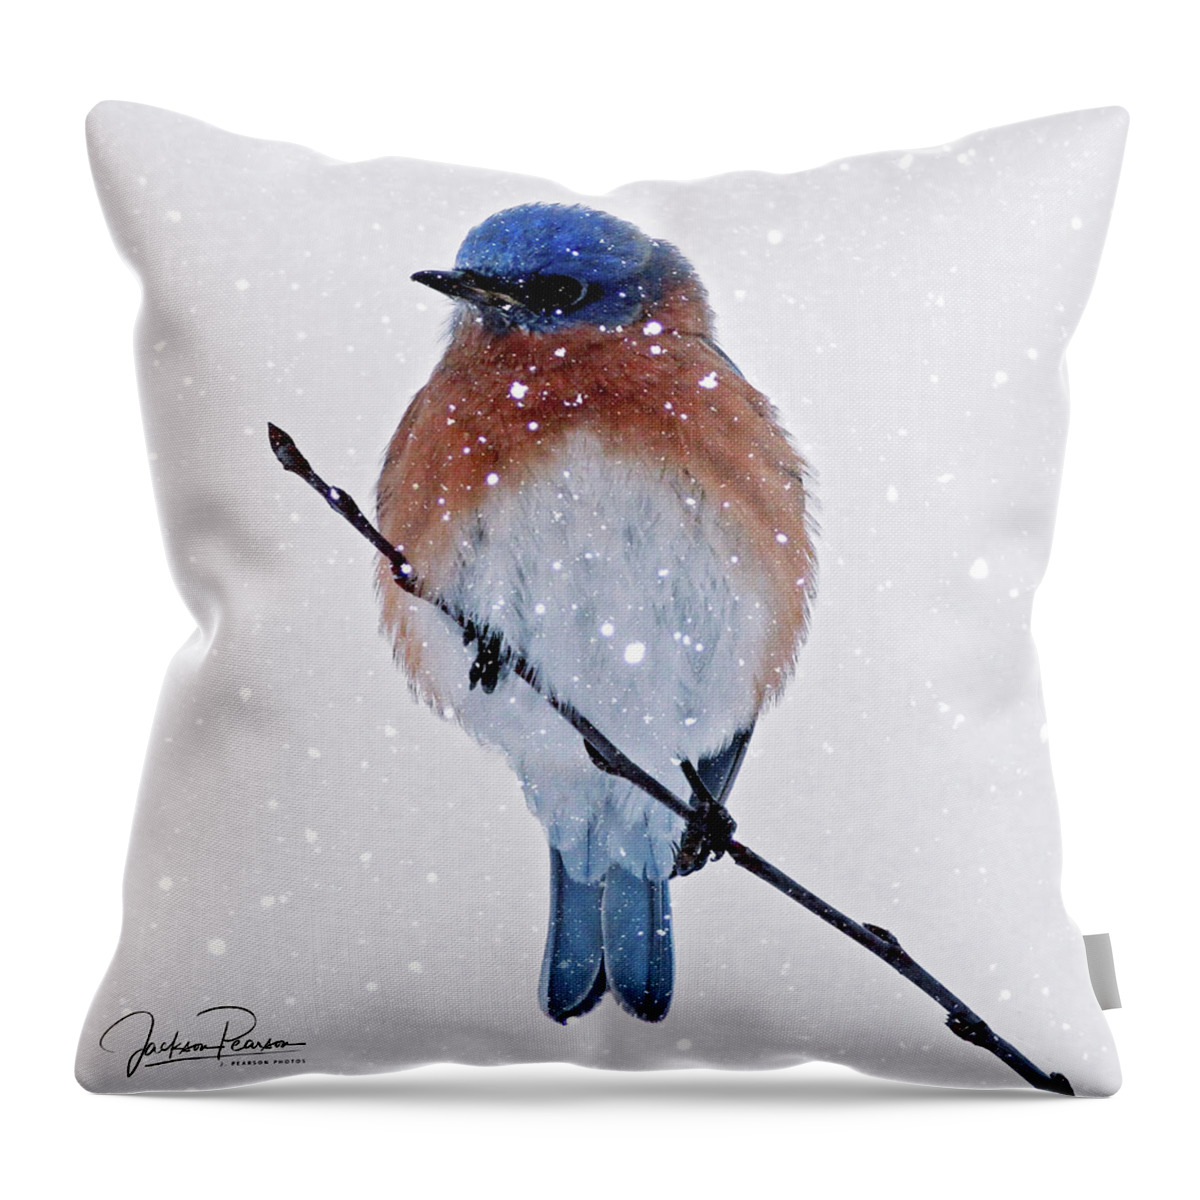 Bluebird Throw Pillow featuring the photograph Winter Bluebird by Jackson Pearson